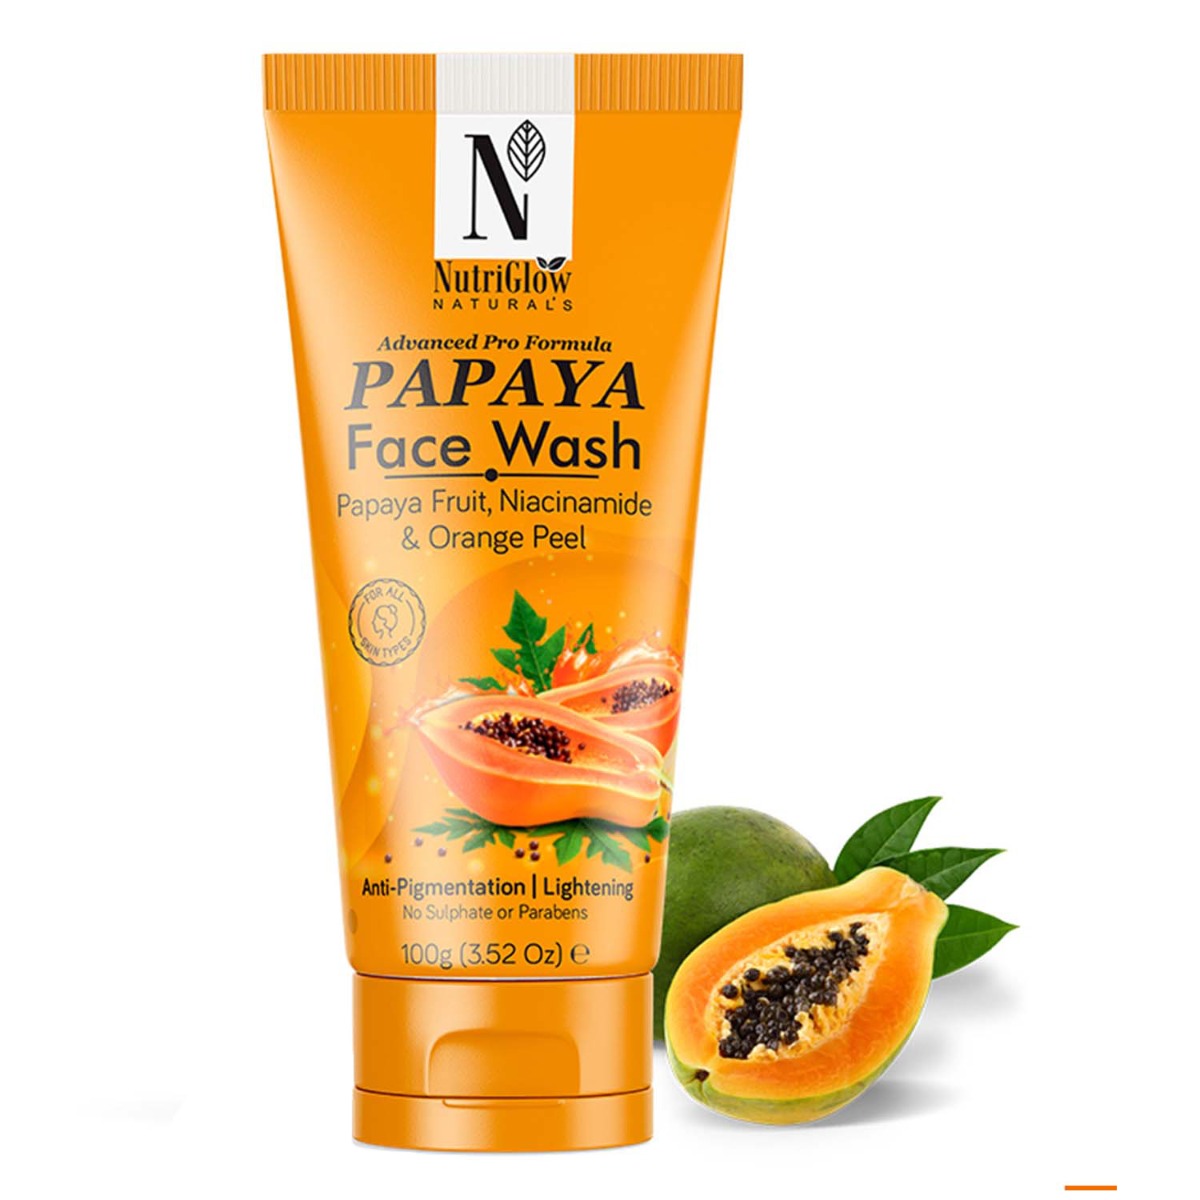 NutriGlow Natural's Advanced Pro Formula Papaya Face Wash For Anti - Pigmentation And Lightening, 100gm